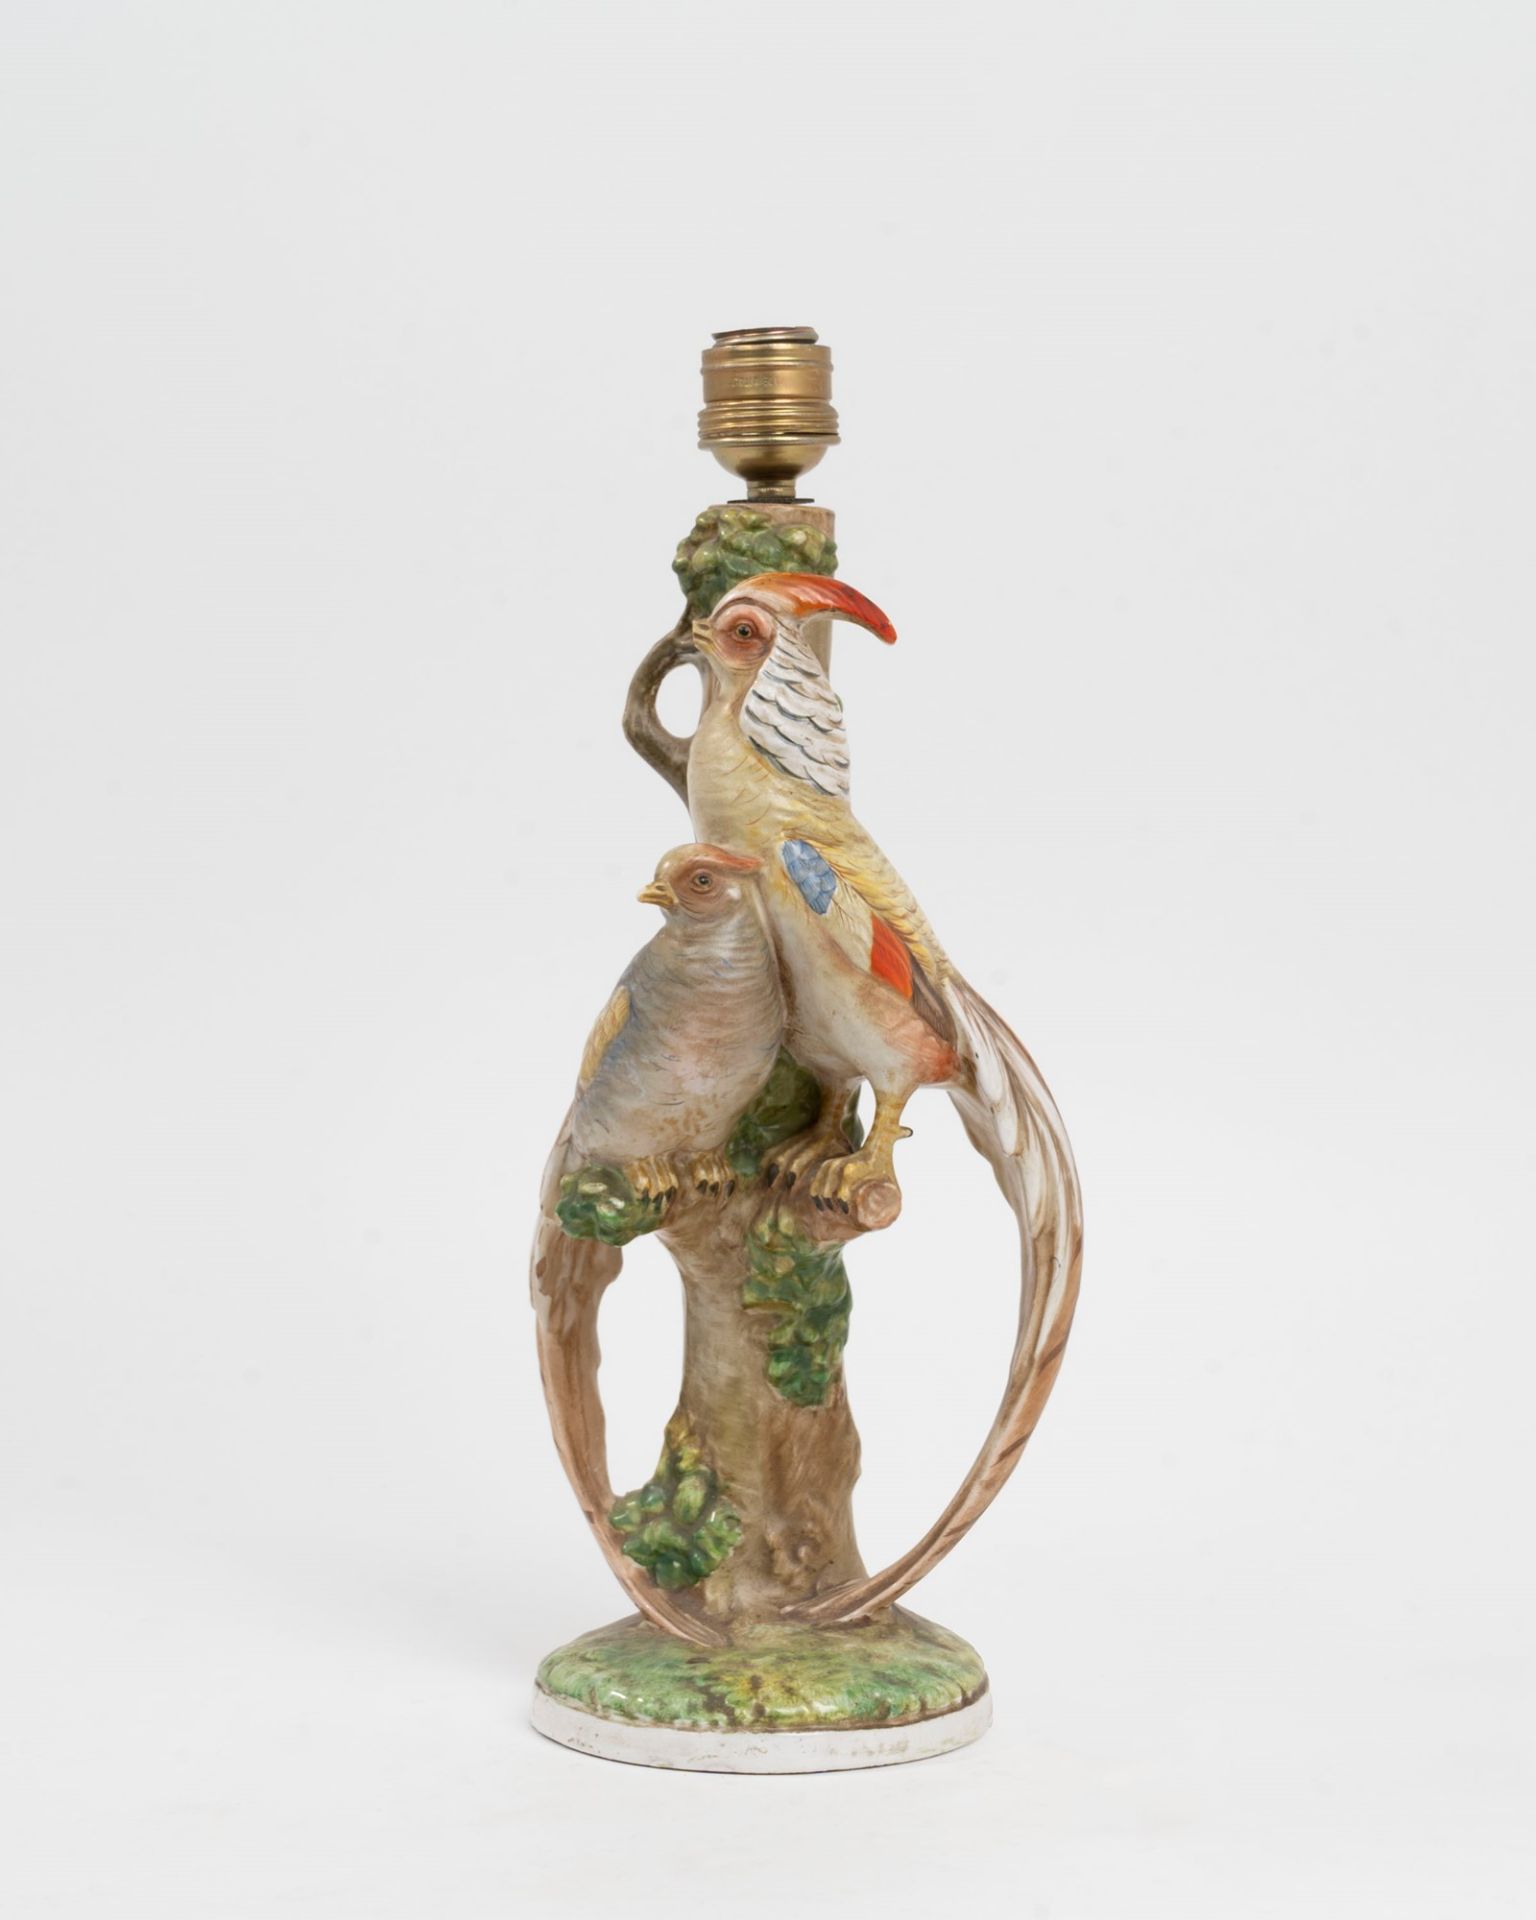 Ugo Zaccagnini - Polychrome ceramic lamp depicting parrots, 20th century